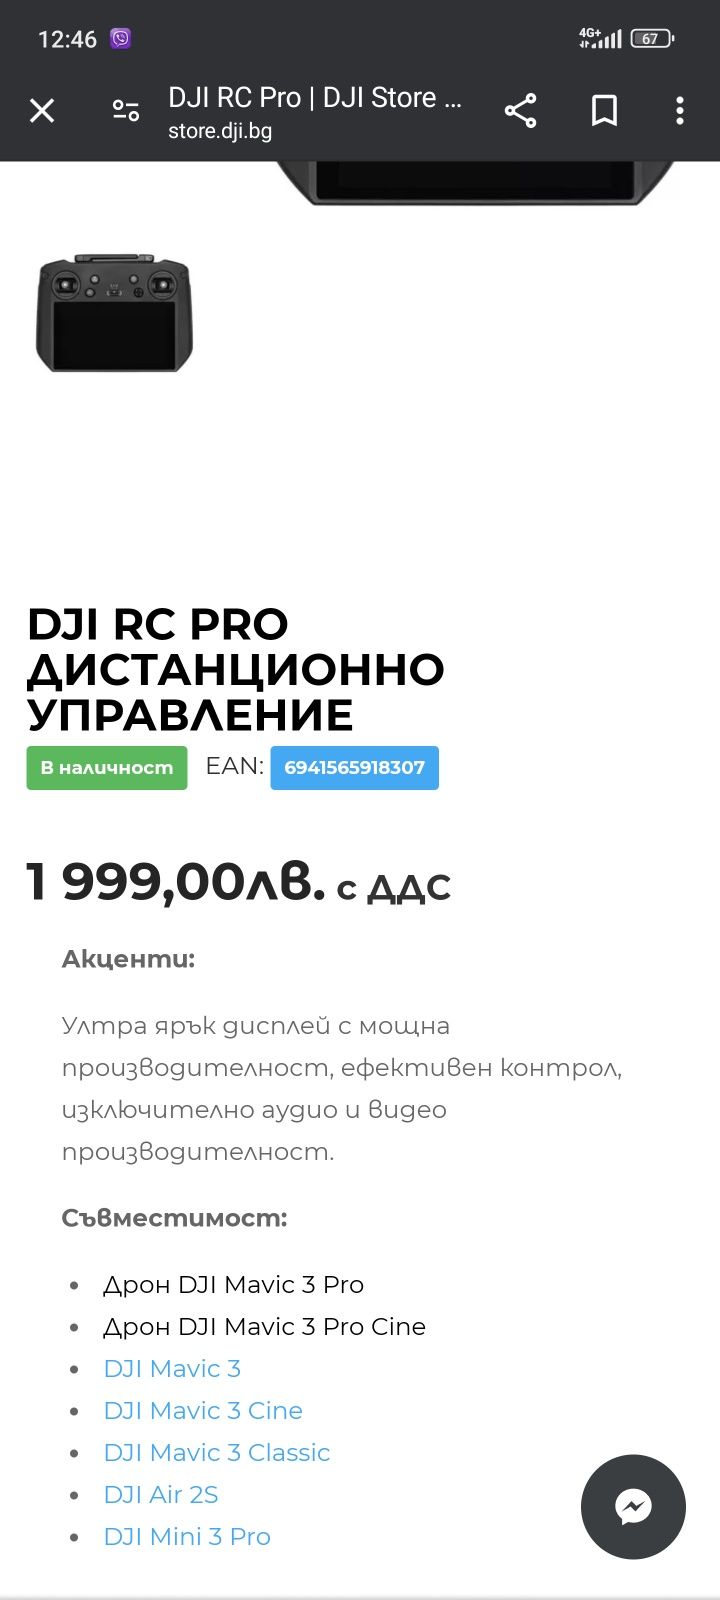 DJI RC Pro controller